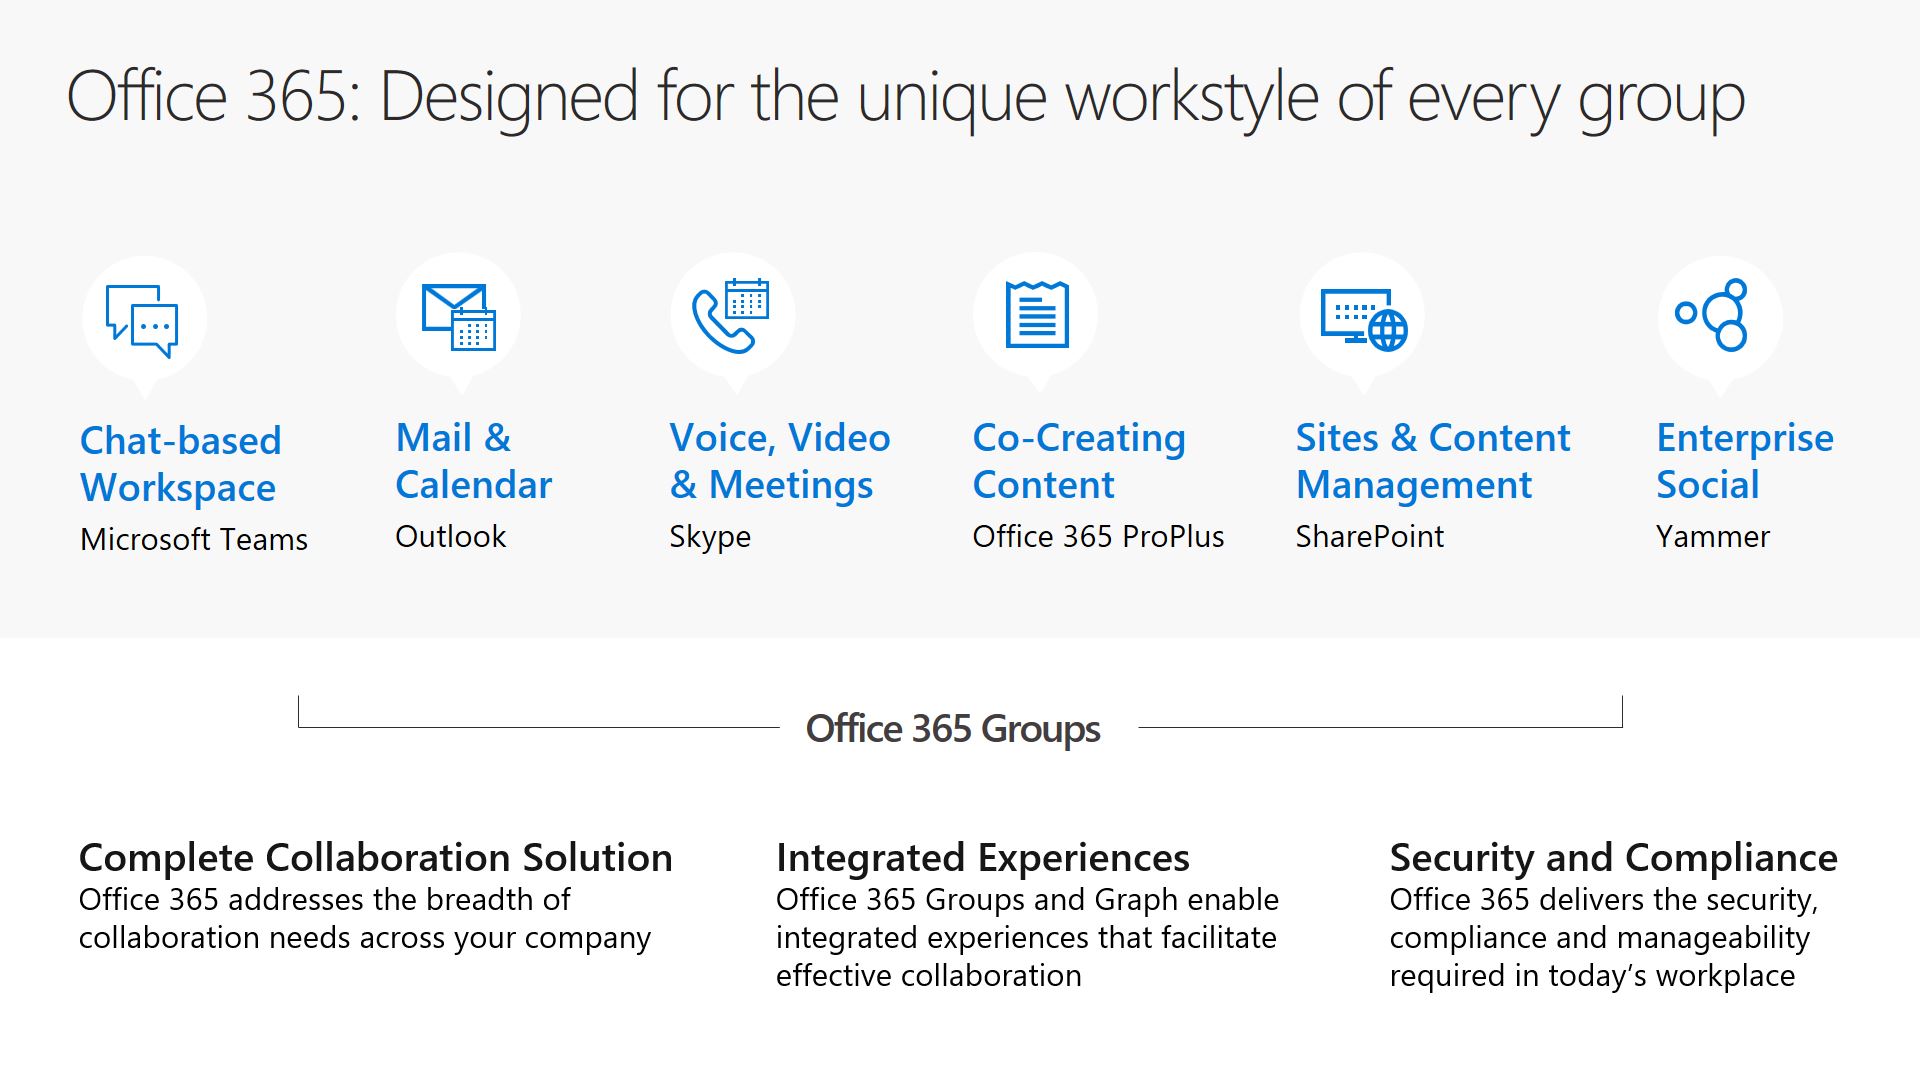 Webinar Slide offer Office 365 Groups insights